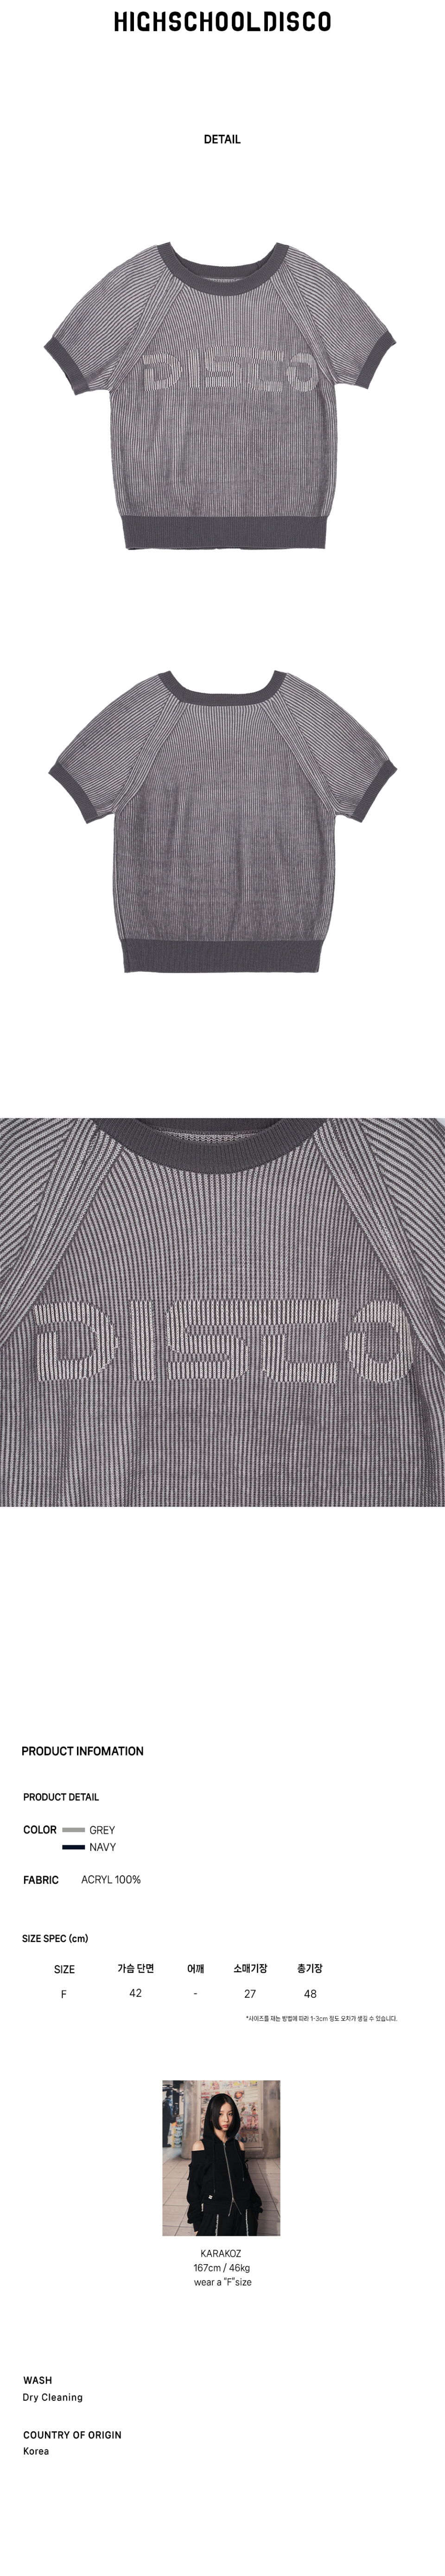 DISCO Two-tone short-sleeved knitwear Gray